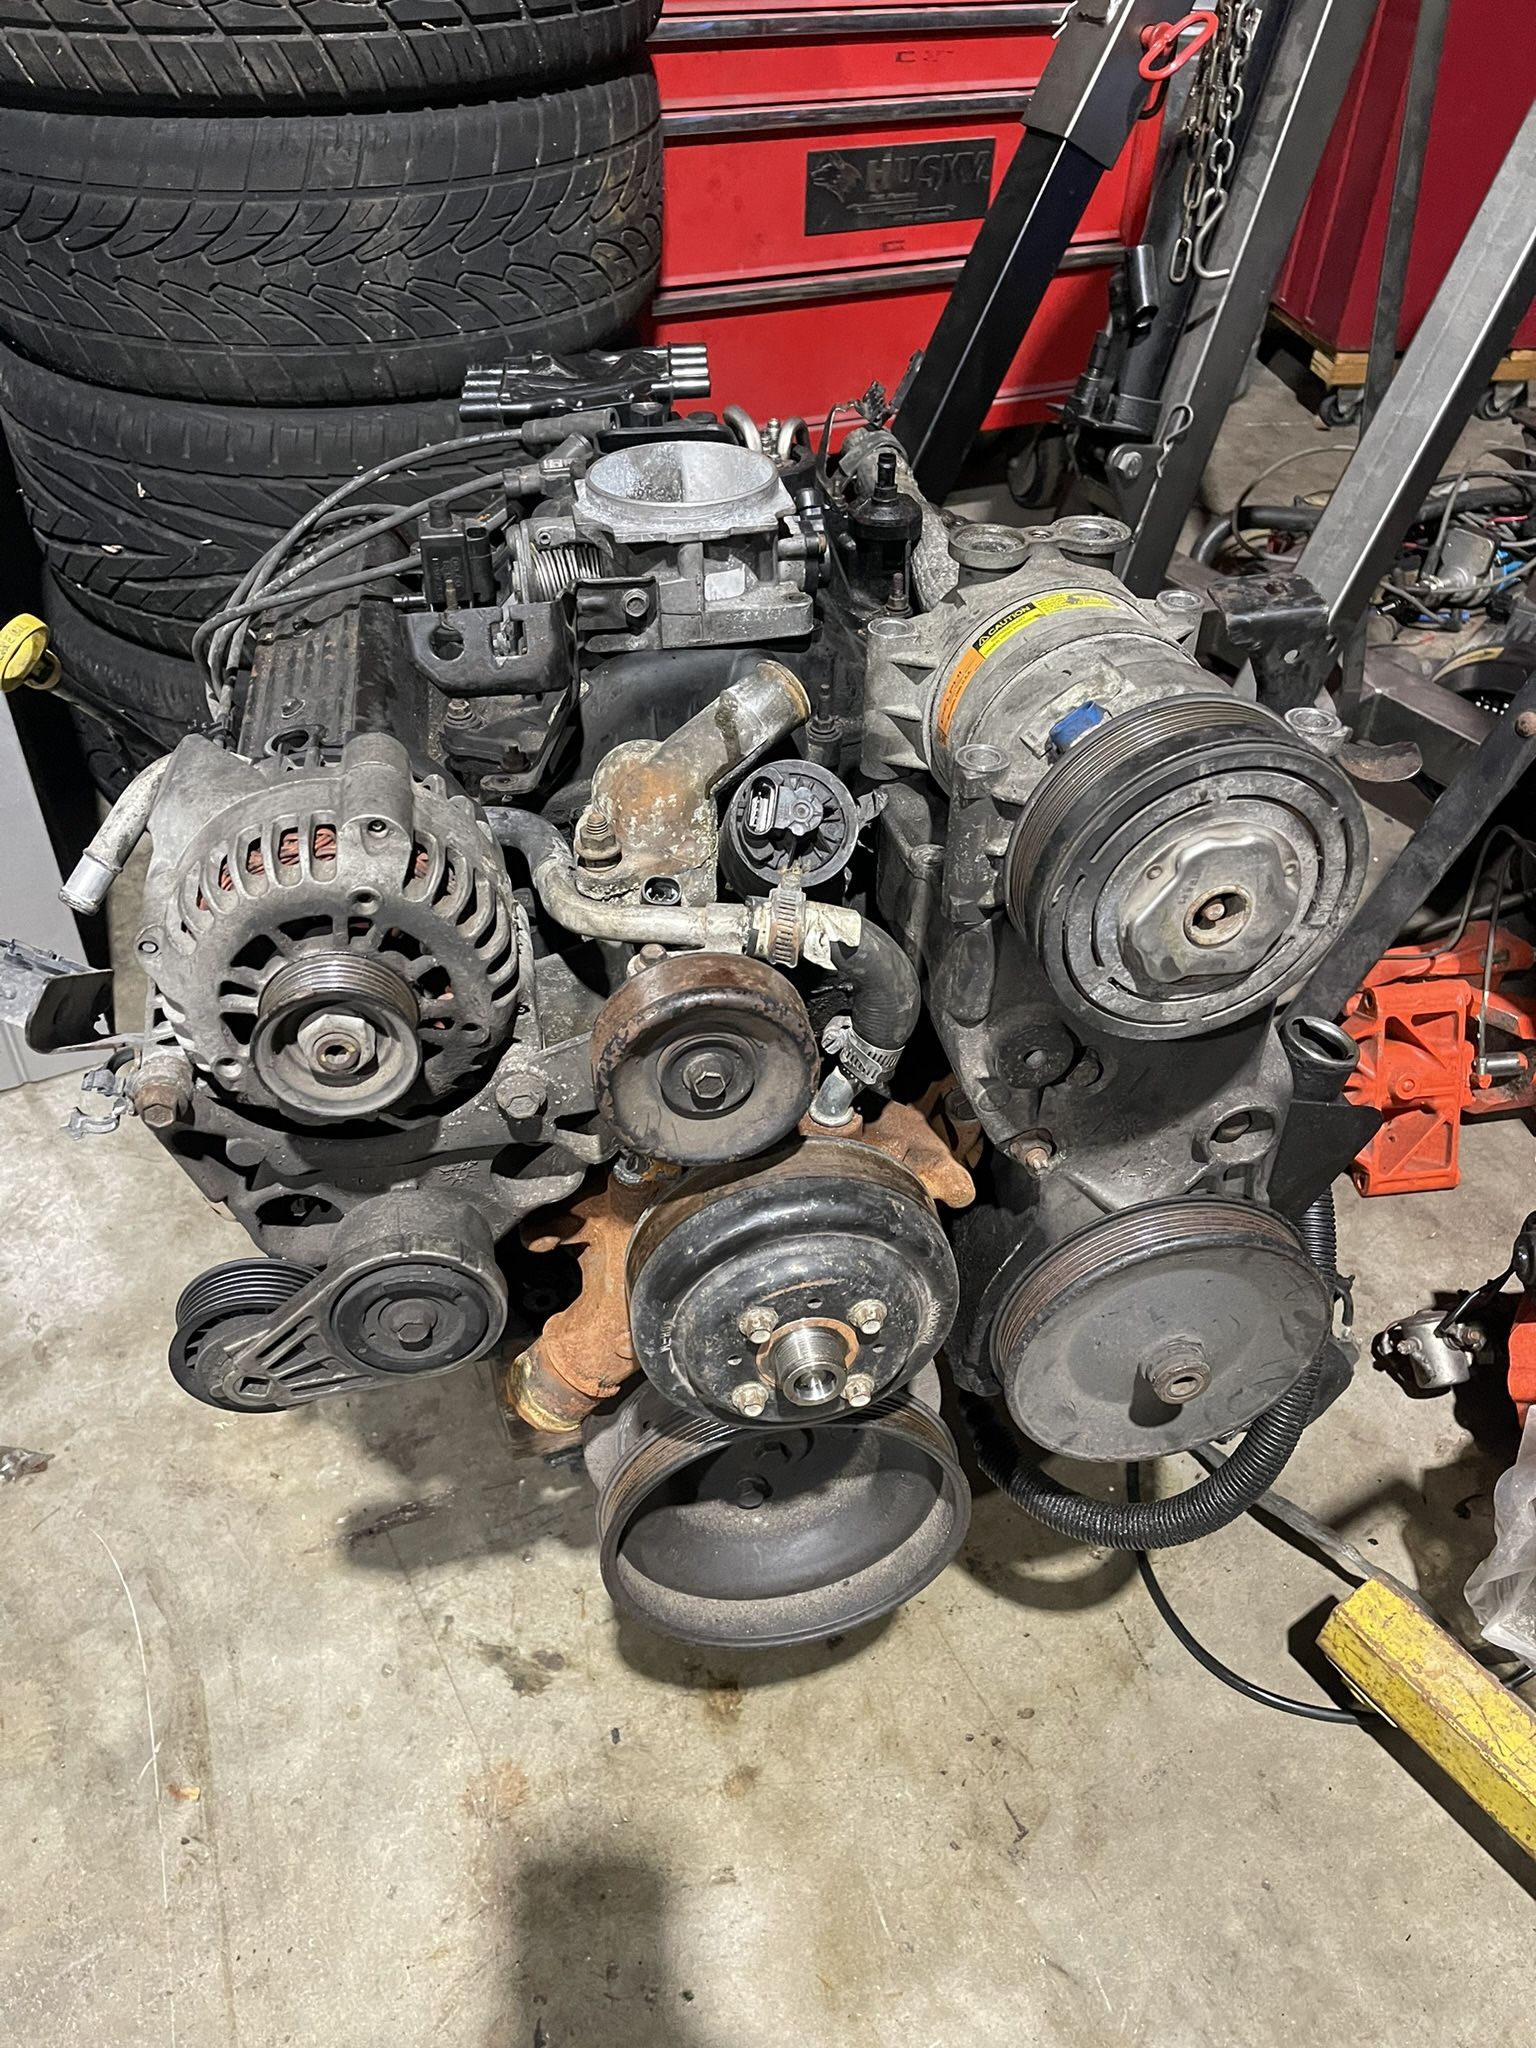 Sbc Vortec 350 Motor For Parts Or Repair 